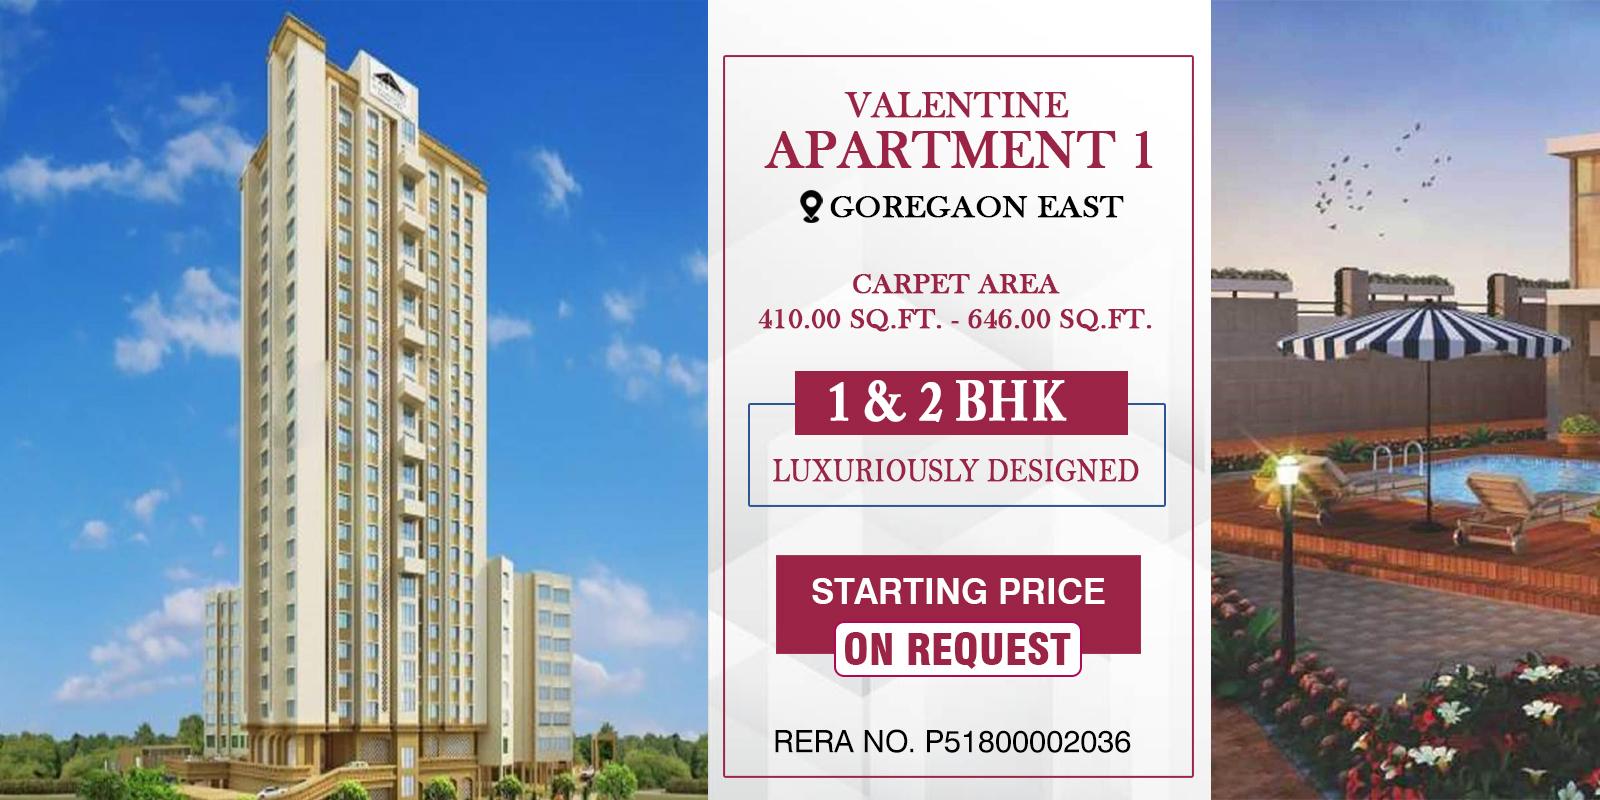 valentine apartment 1 malad east-Valentine-banner.jpg